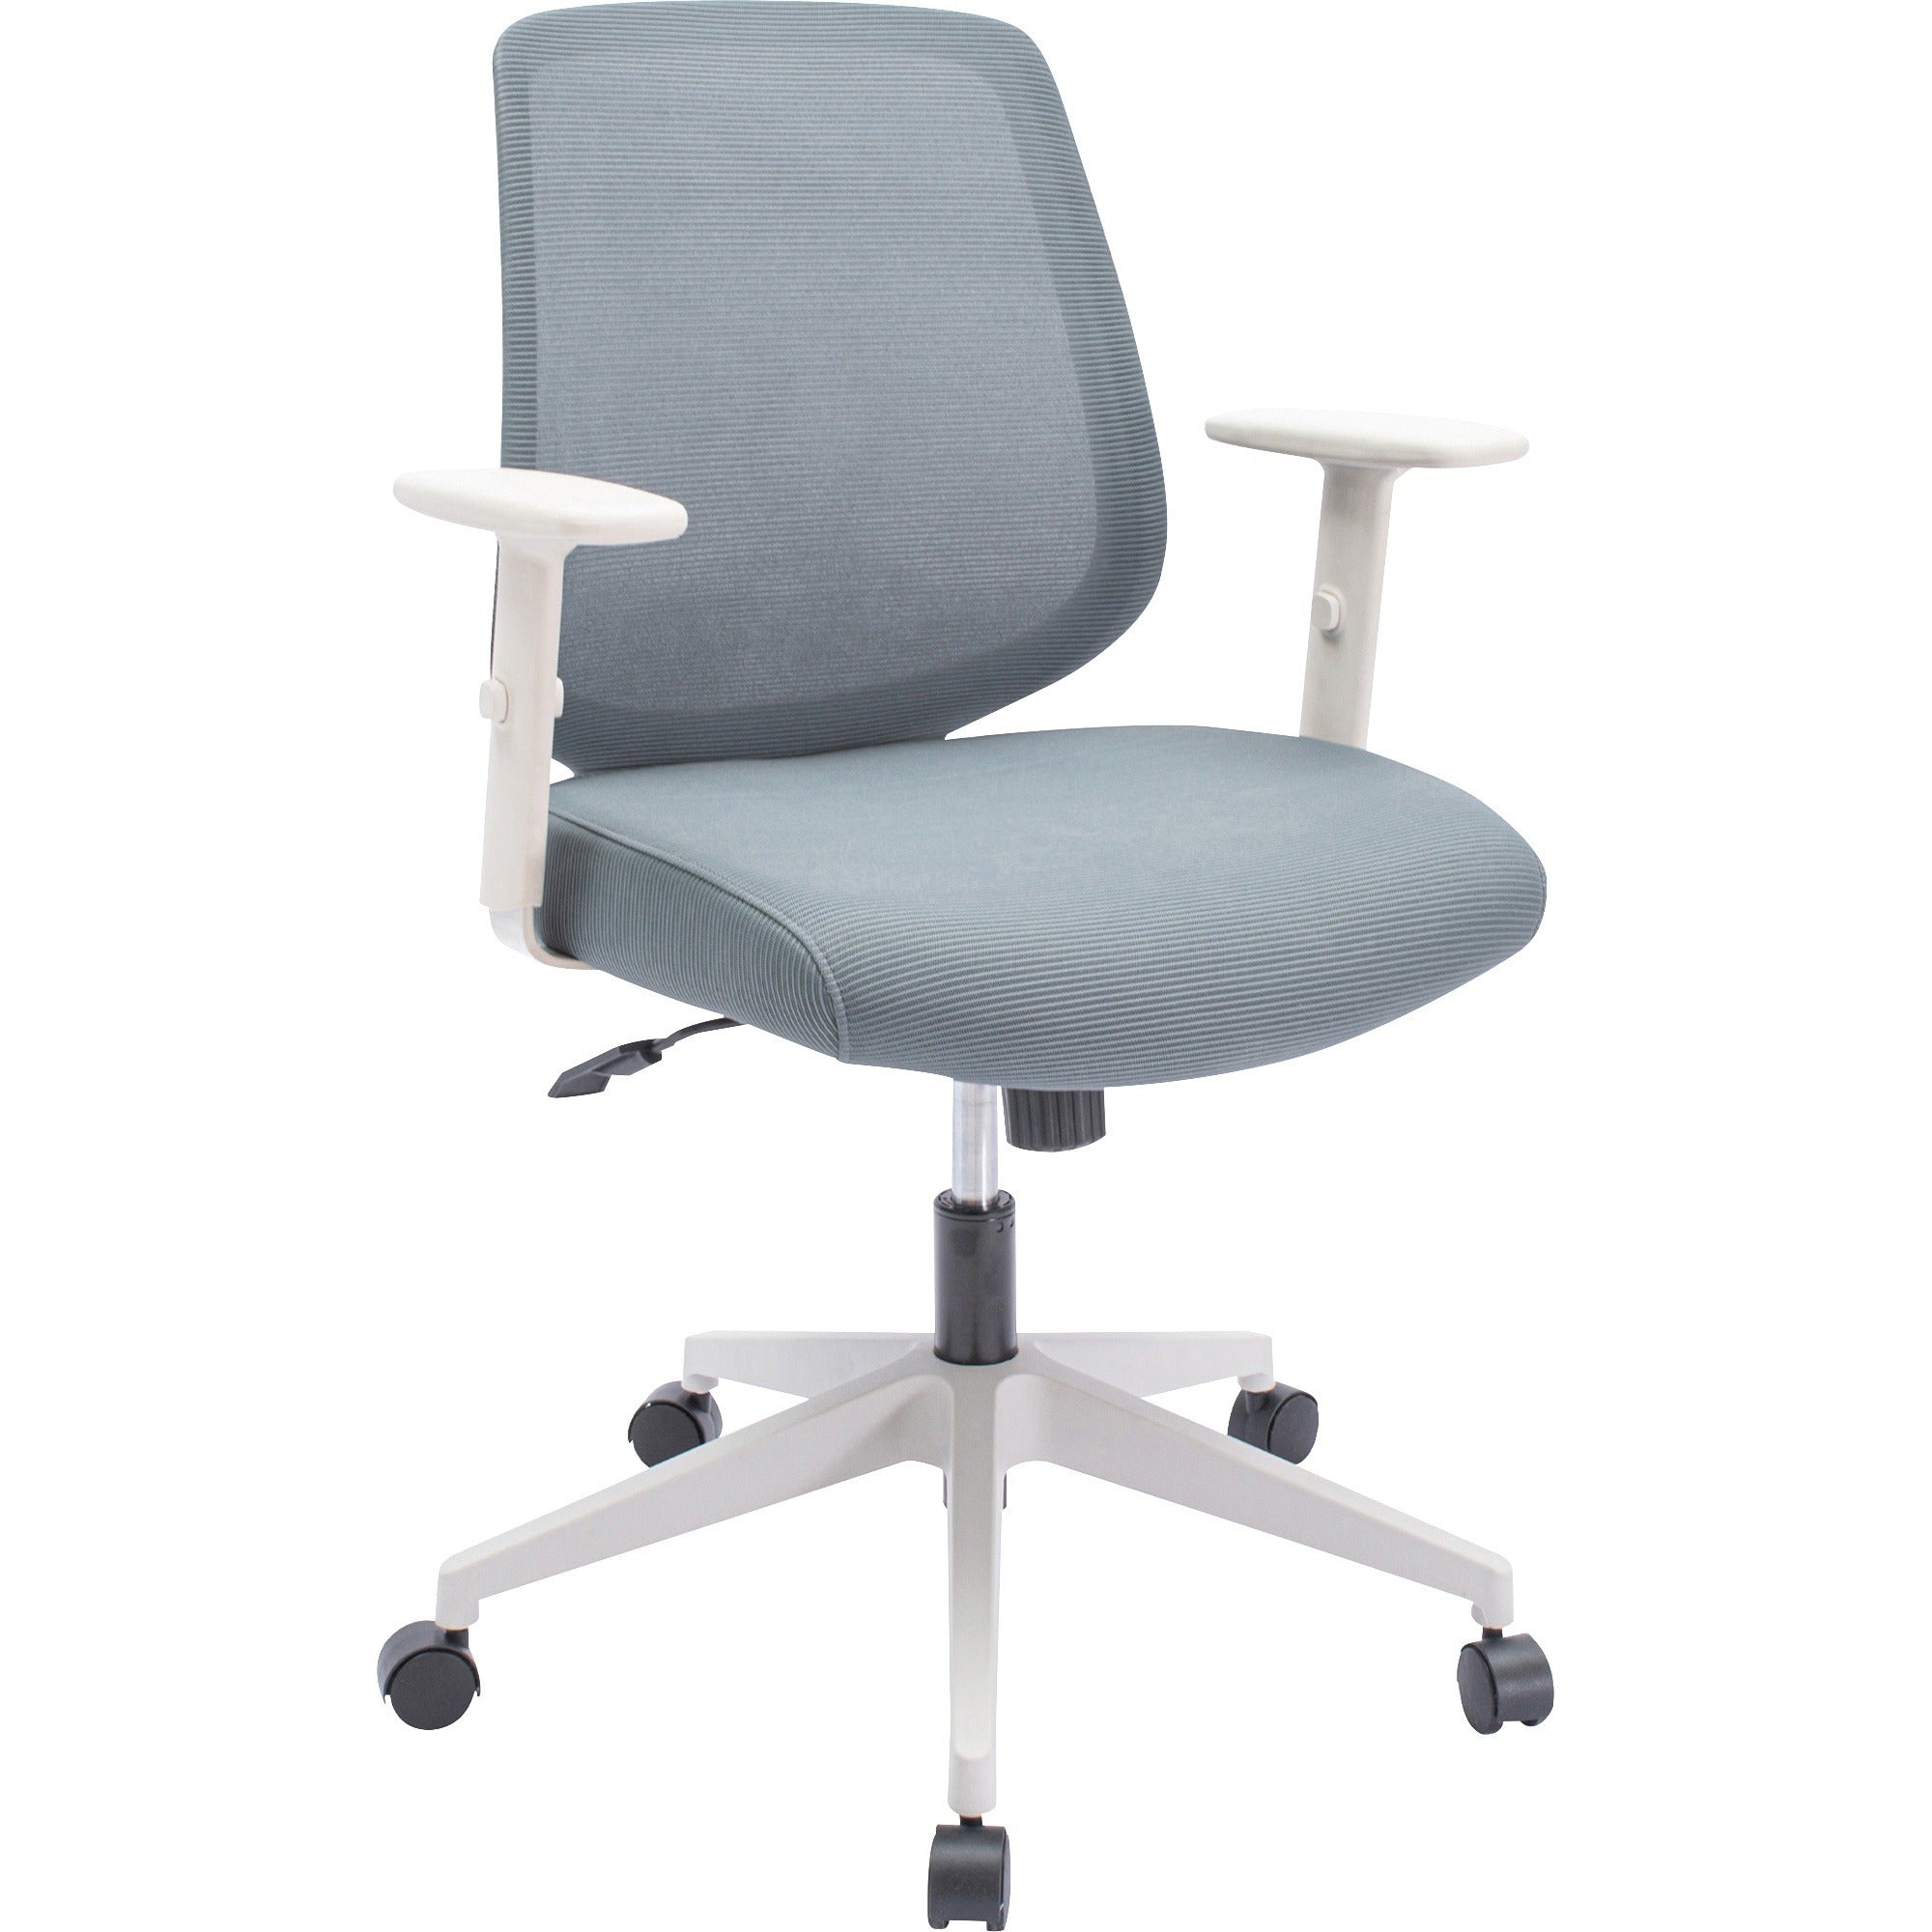 nusparc-mid-back-task-chair-fabric-back-mid-back-5-star-base-gray-armrest-1-each_nprch201magy - 1